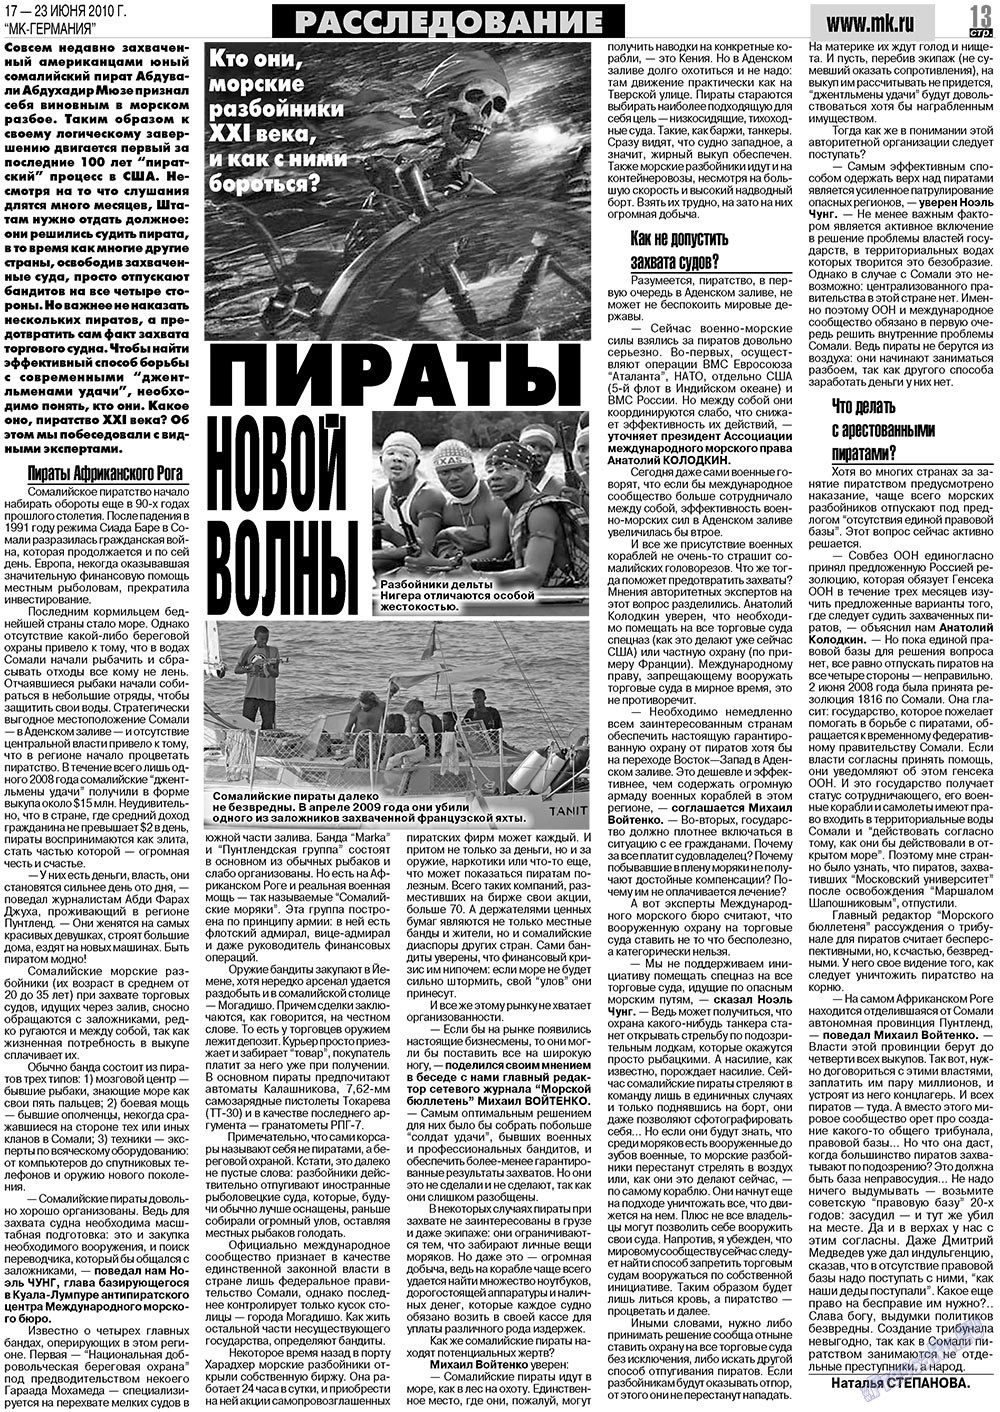 МК-Германия, газета. 2010 №25 стр.13